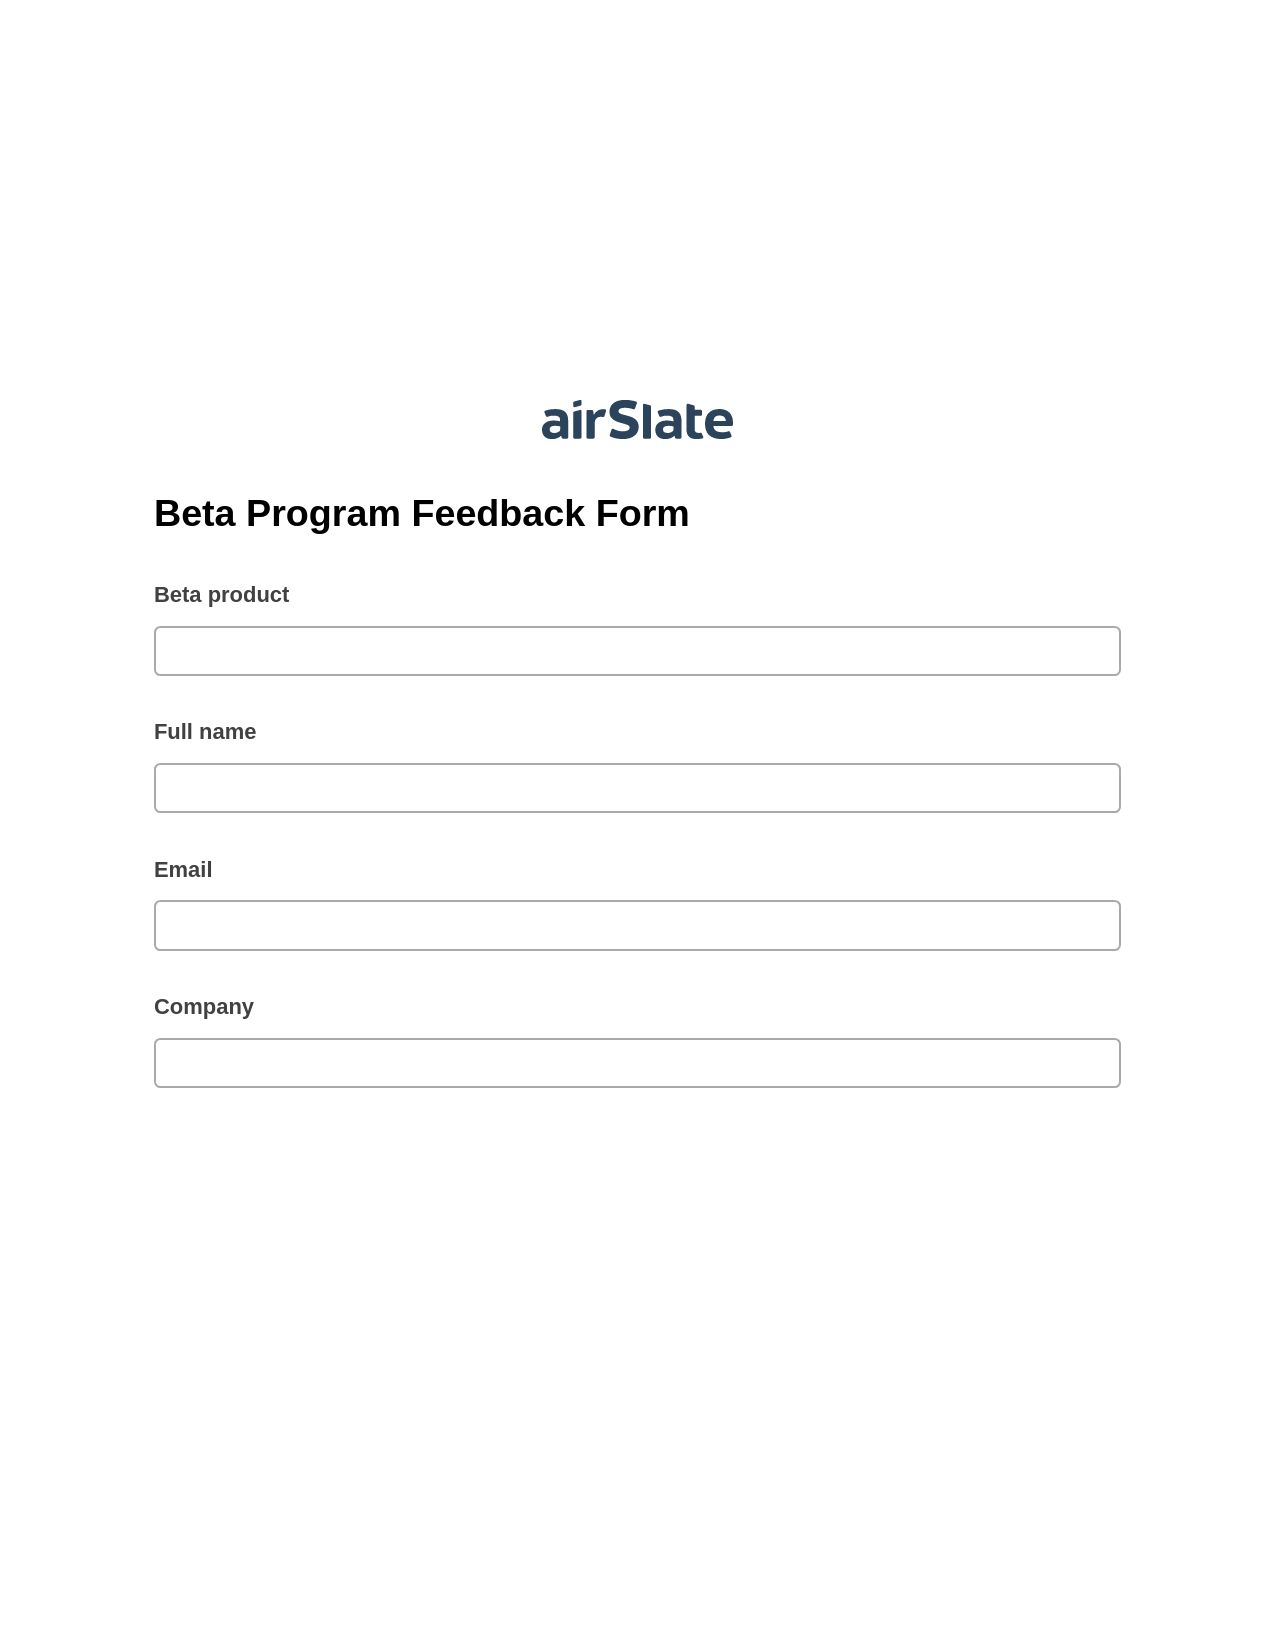 Beta Program Feedback Form Pre-fill Slate from MS Dynamics 365 Records Bot, Webhook Bot, Text Message Notification Postfinish Bot